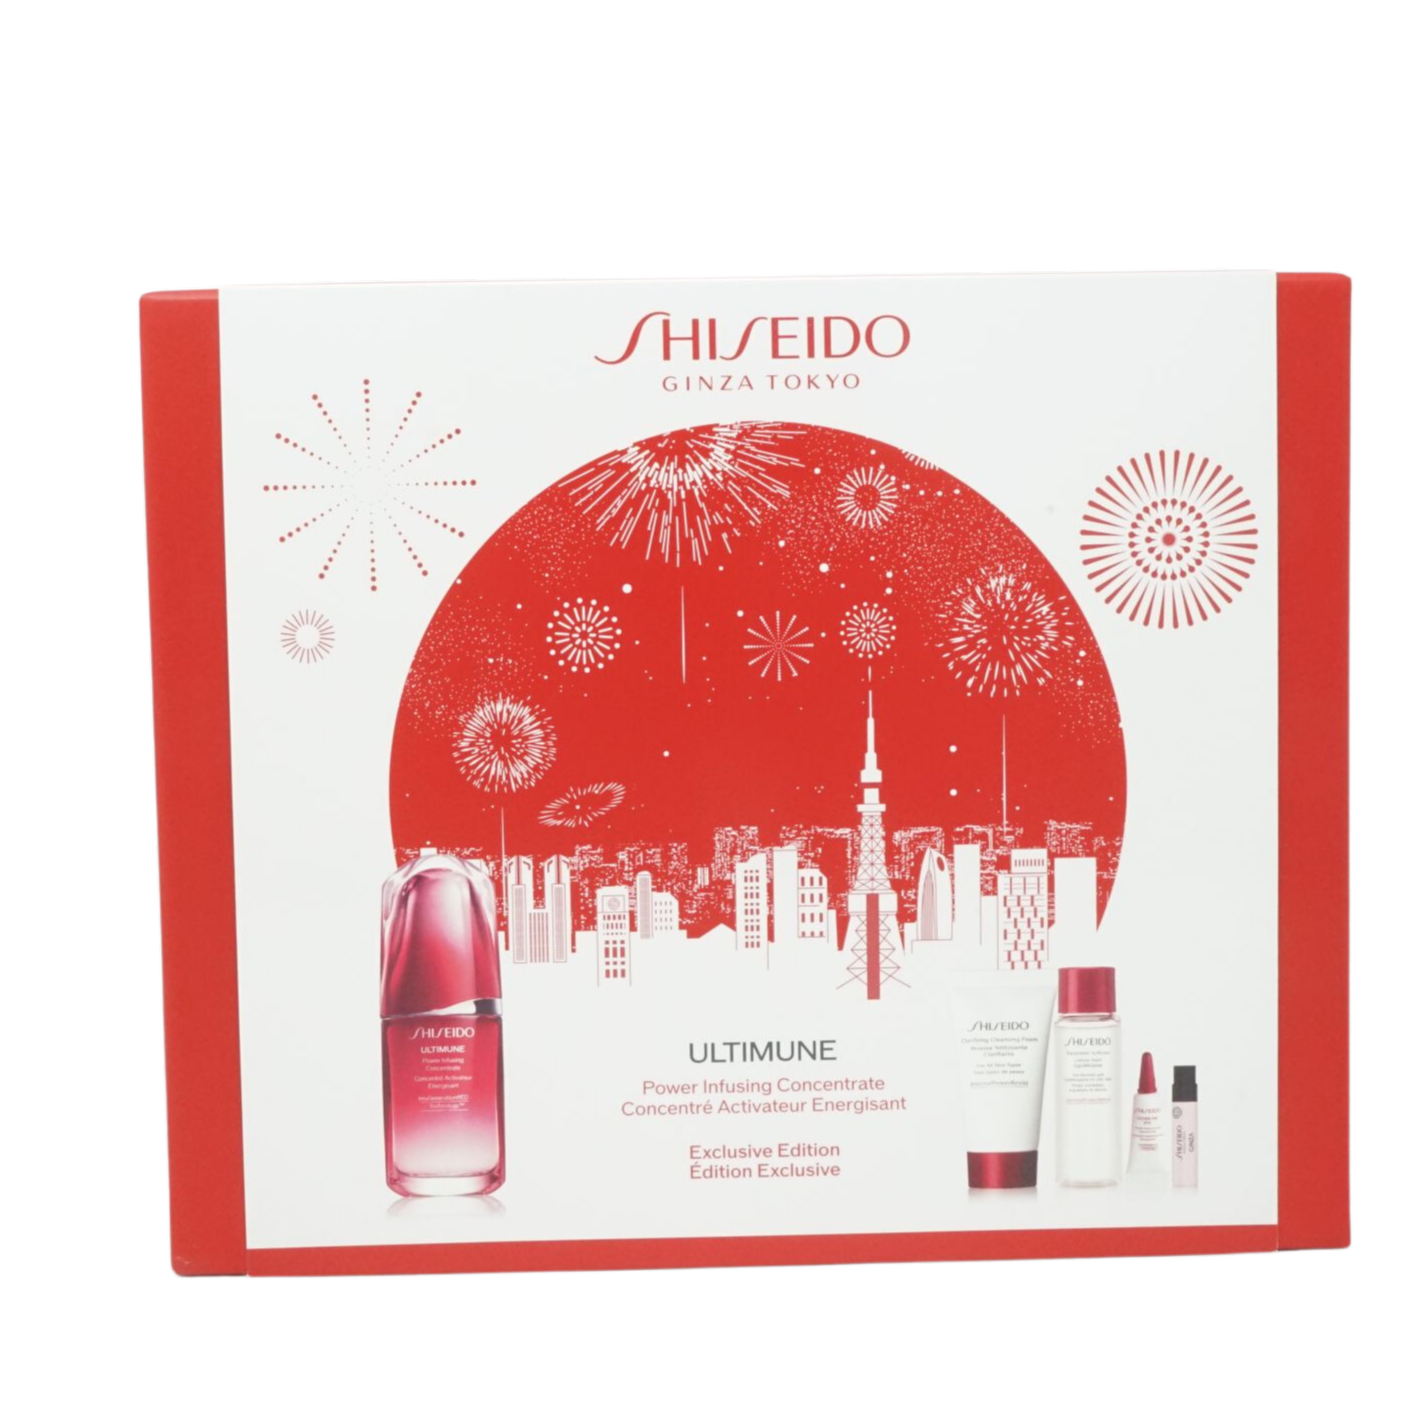 Shiseido Ginza Tokyo Ultimune Serum 50ml + Cleansing Foam 30ml + Softener 30ml + Eye Care 3ml + Eau de parfum 0,8ml